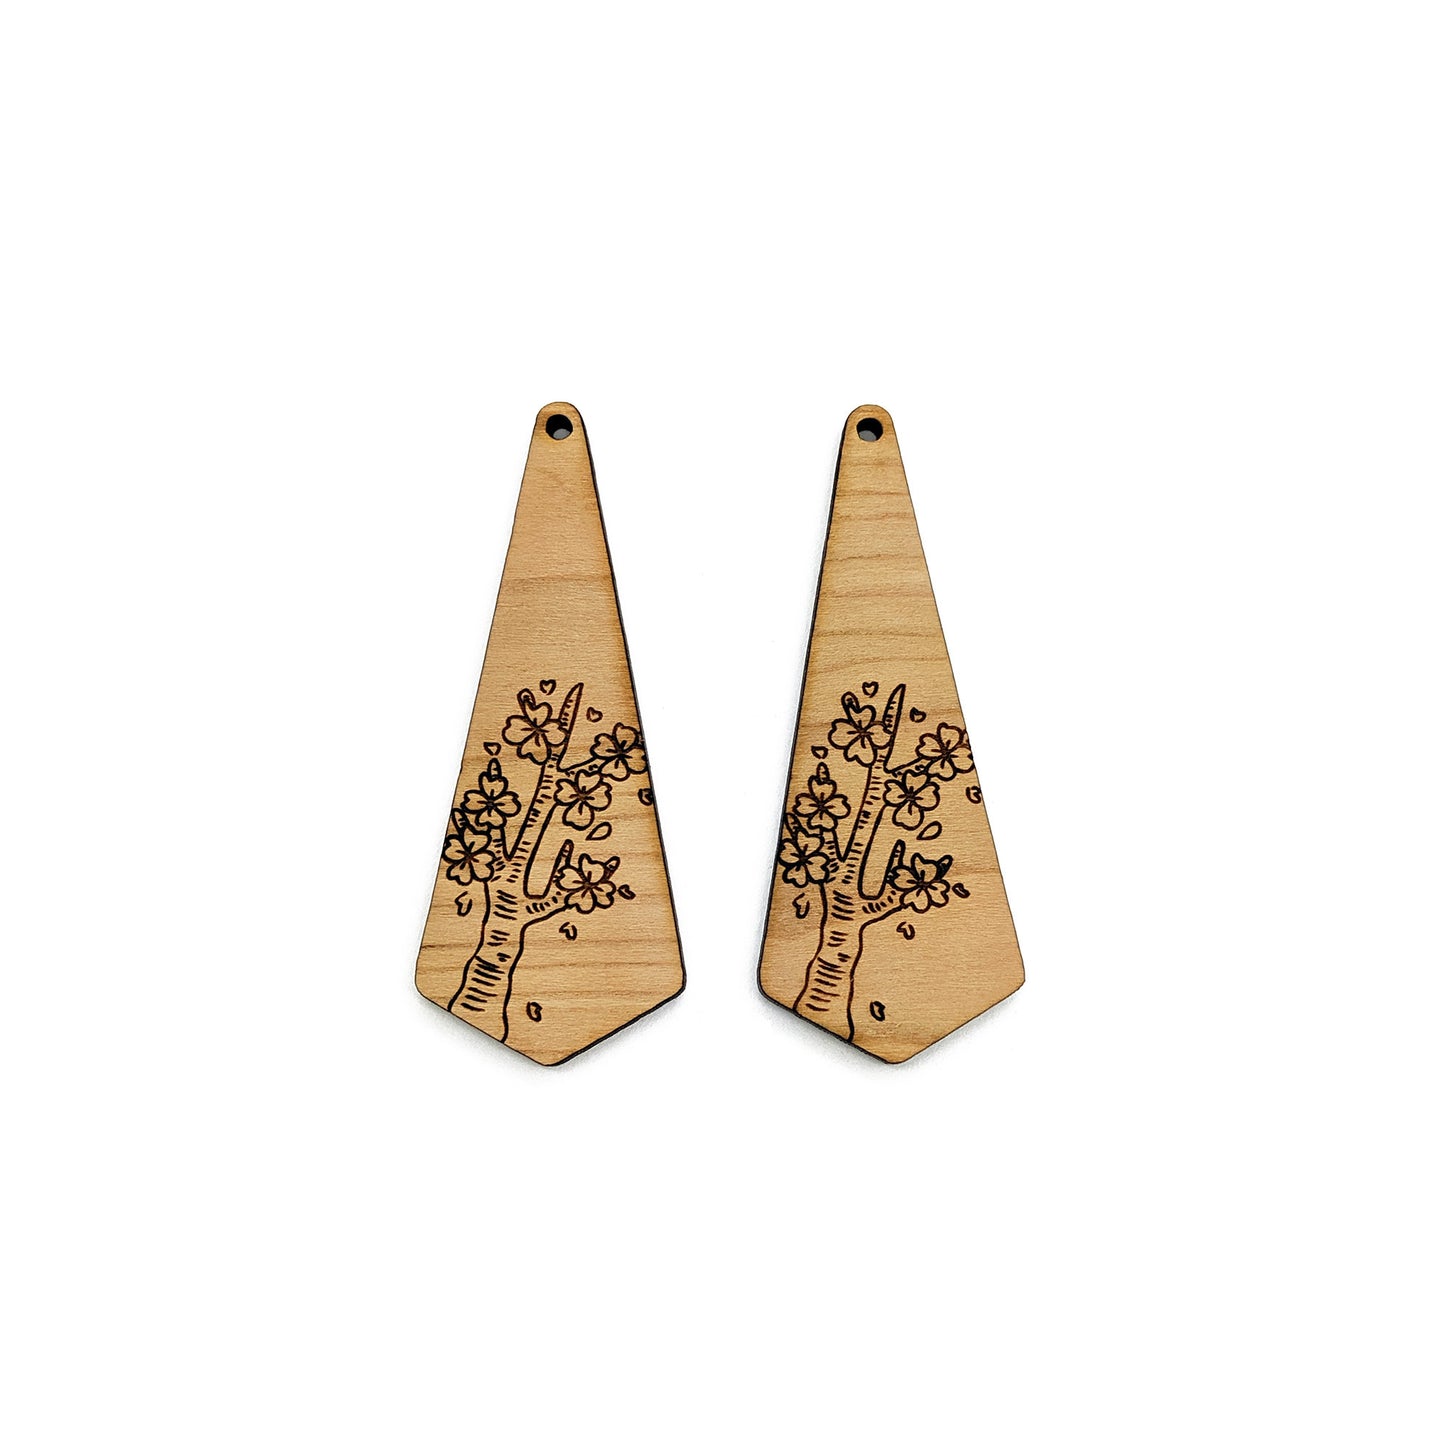 Cherry Blossom Engraved Triangular Shaped Wood Jewelry Charm Blanks